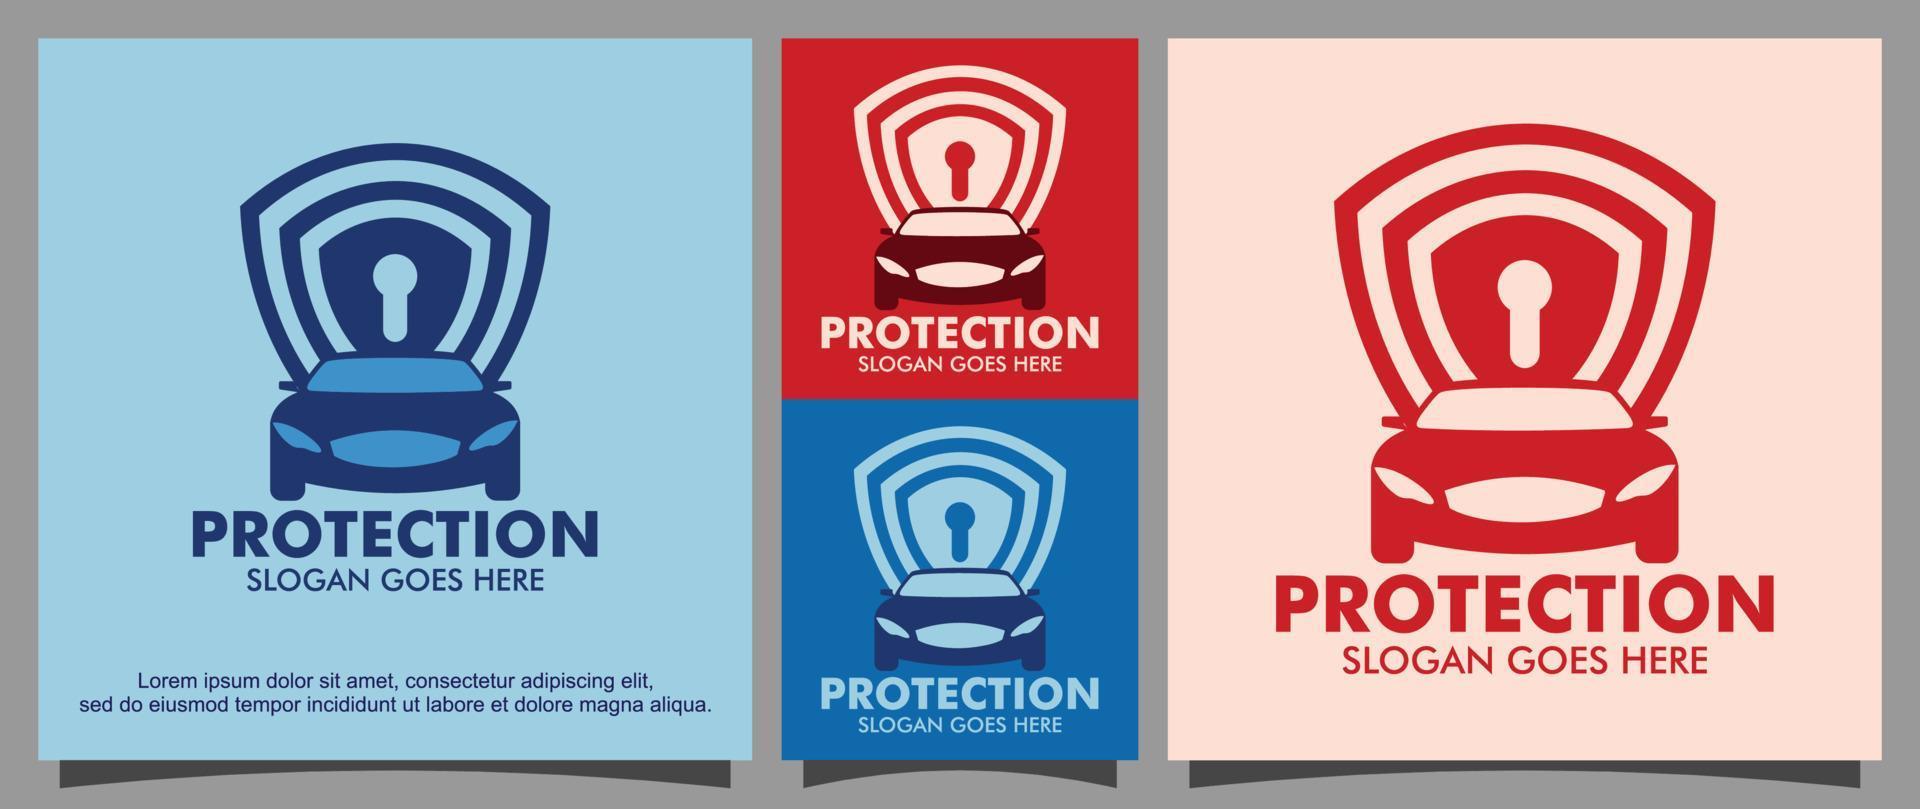 Car protection insurance logo template vector